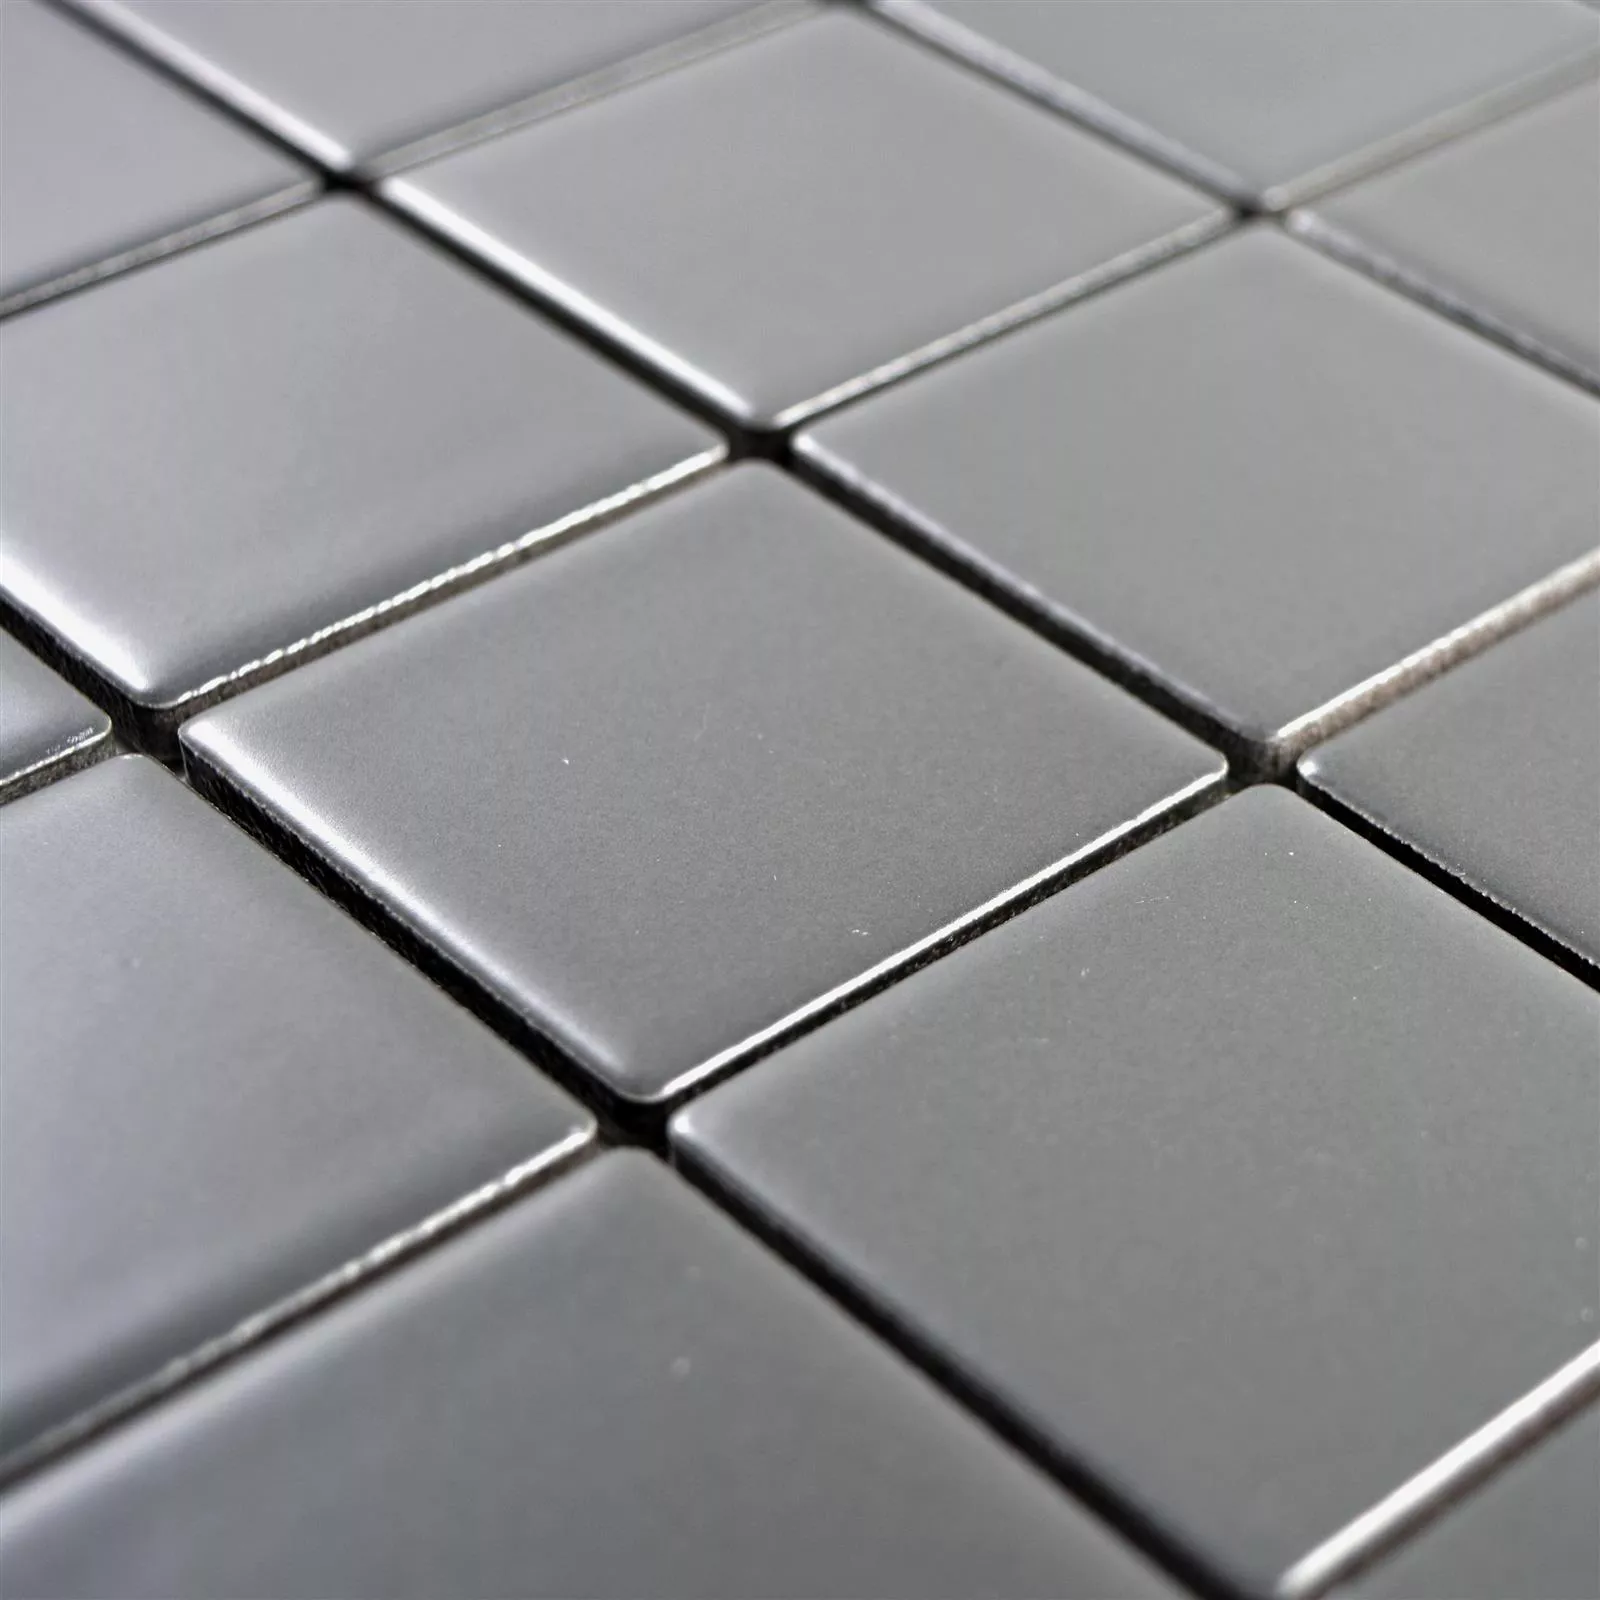 Ceramic Mosaic Tiles Adrian Grey Mat Square 48